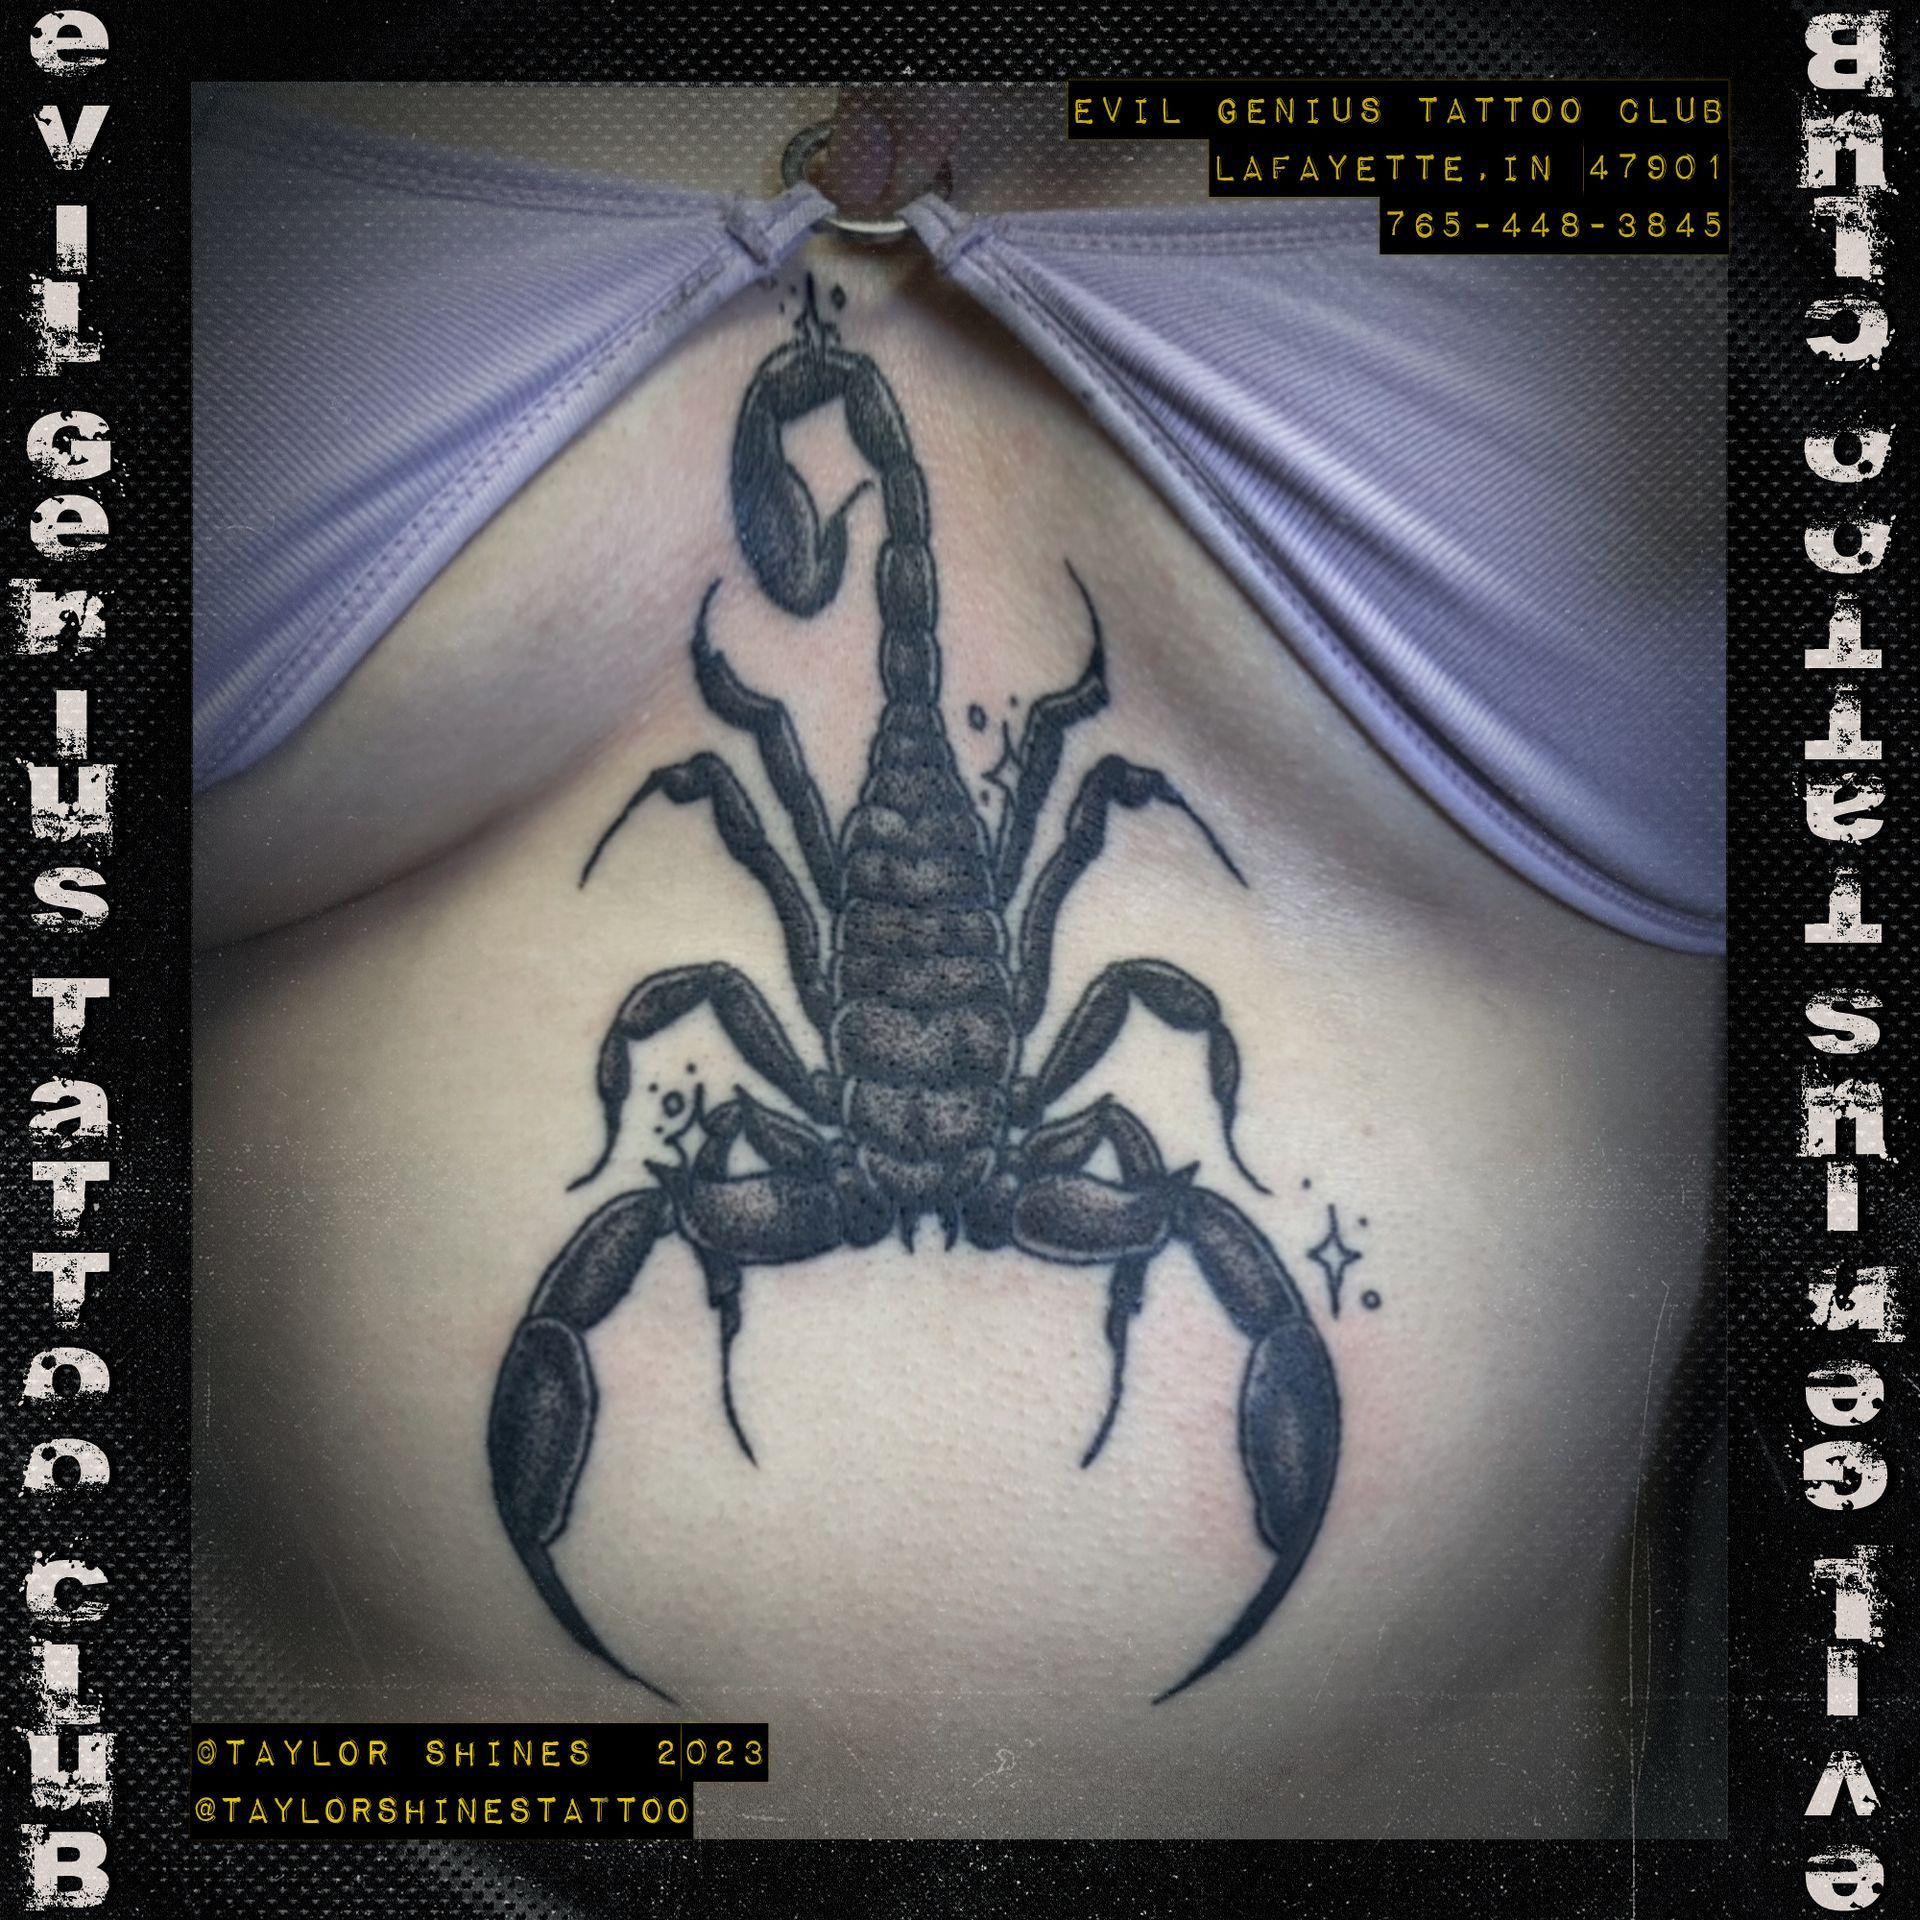 Taylor Shines scorpion tattoo